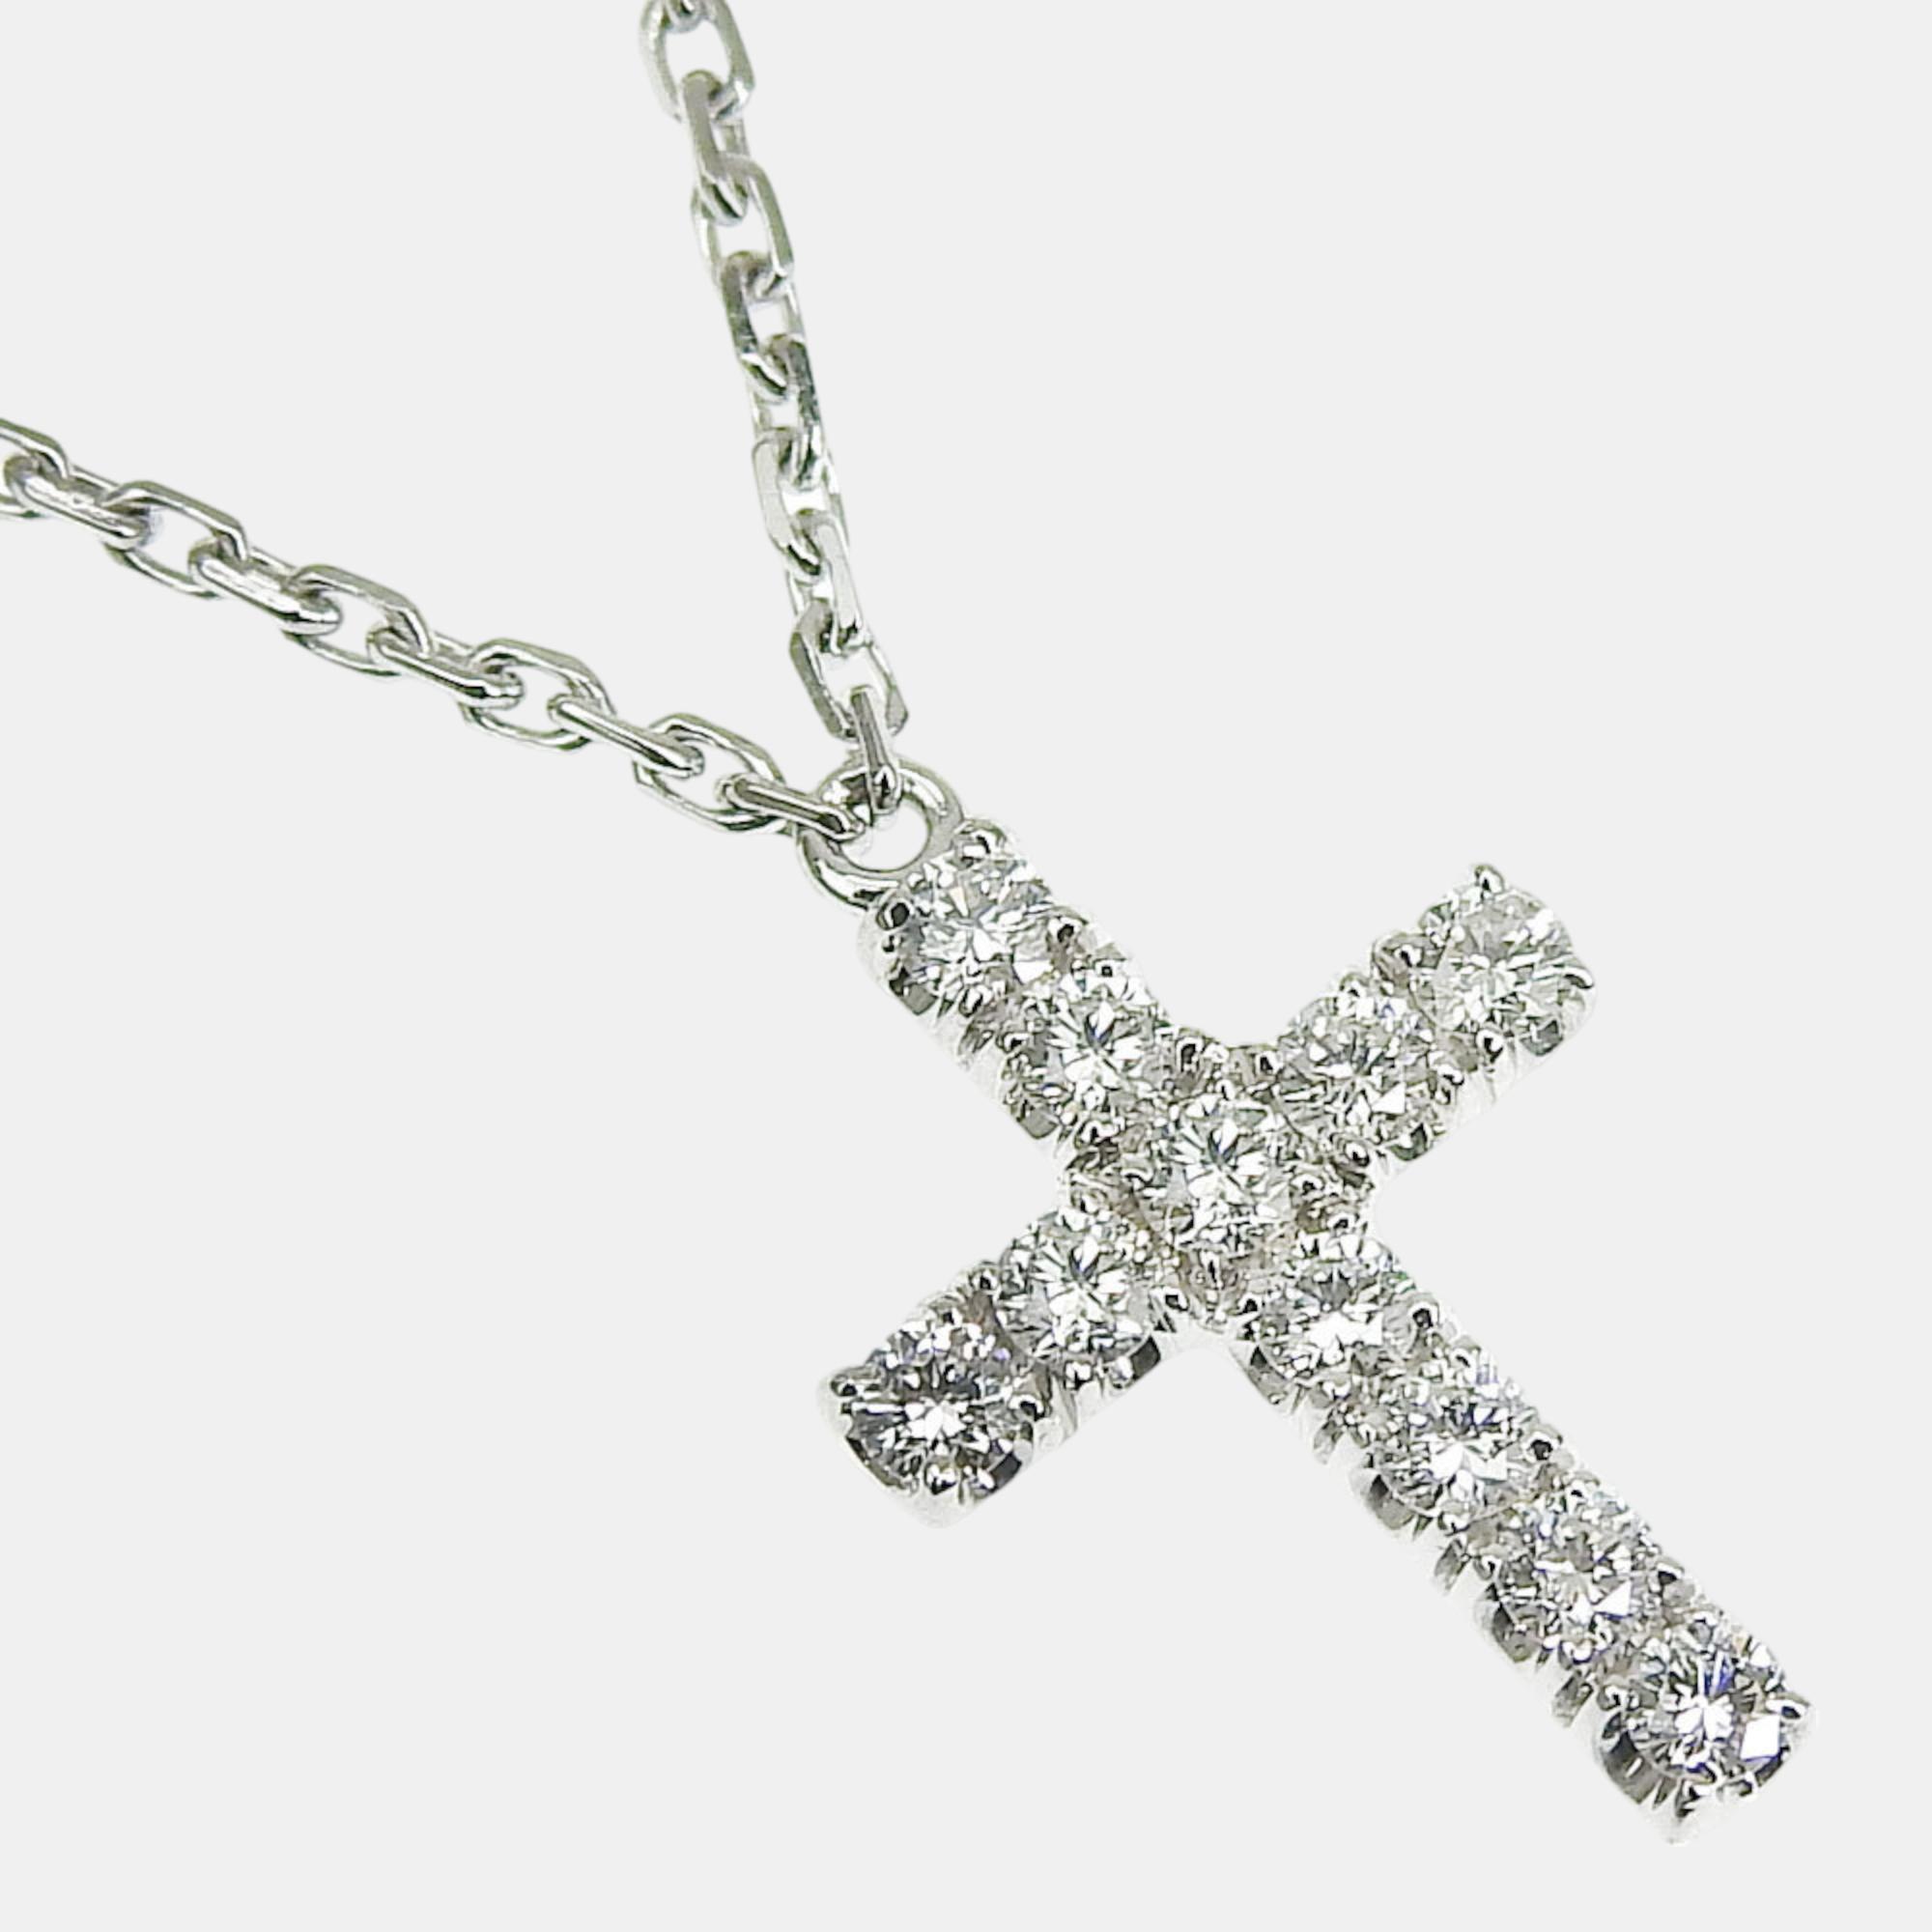 Cartier Symbols Cross 18K White Gold Diamond Necklace